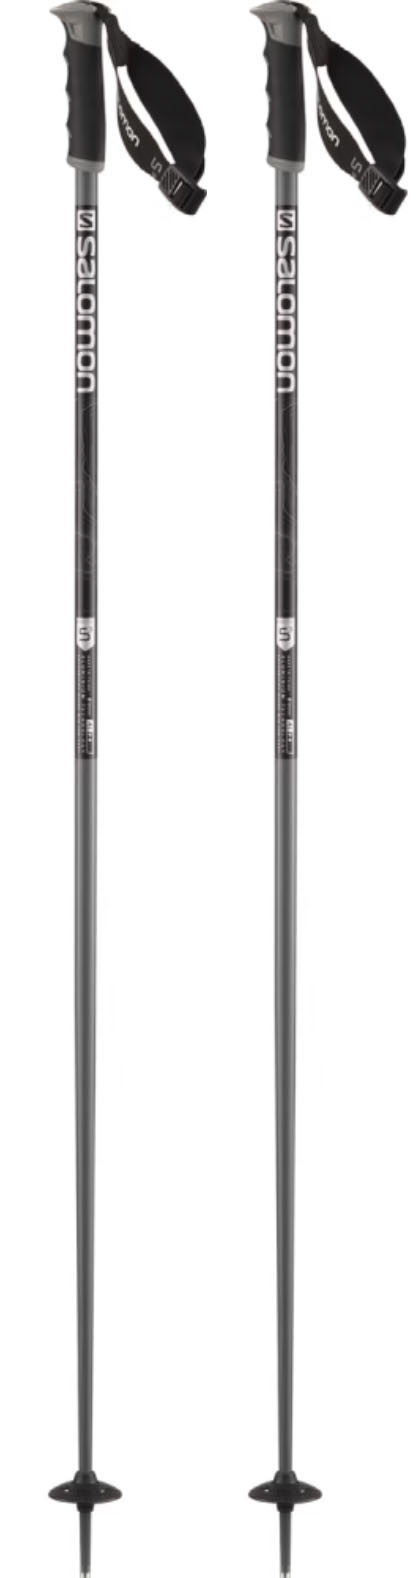 Salomon Arctic S3 ski poles